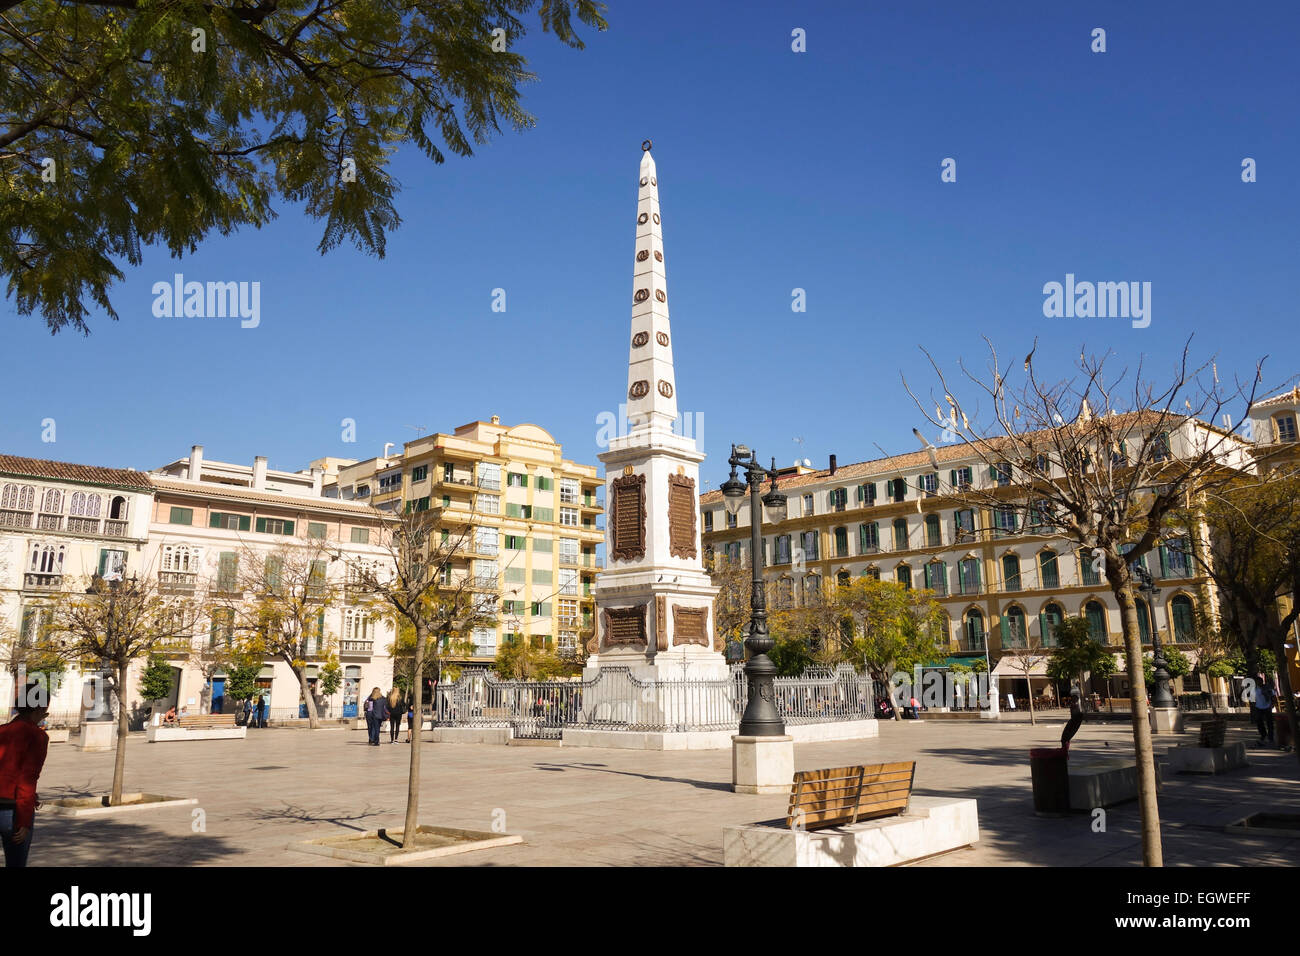 Plaza de la Merced (Mercy Square) monument, honoring liberal General Torrijos, square plaza, Malaga, Spain. Stock Photo